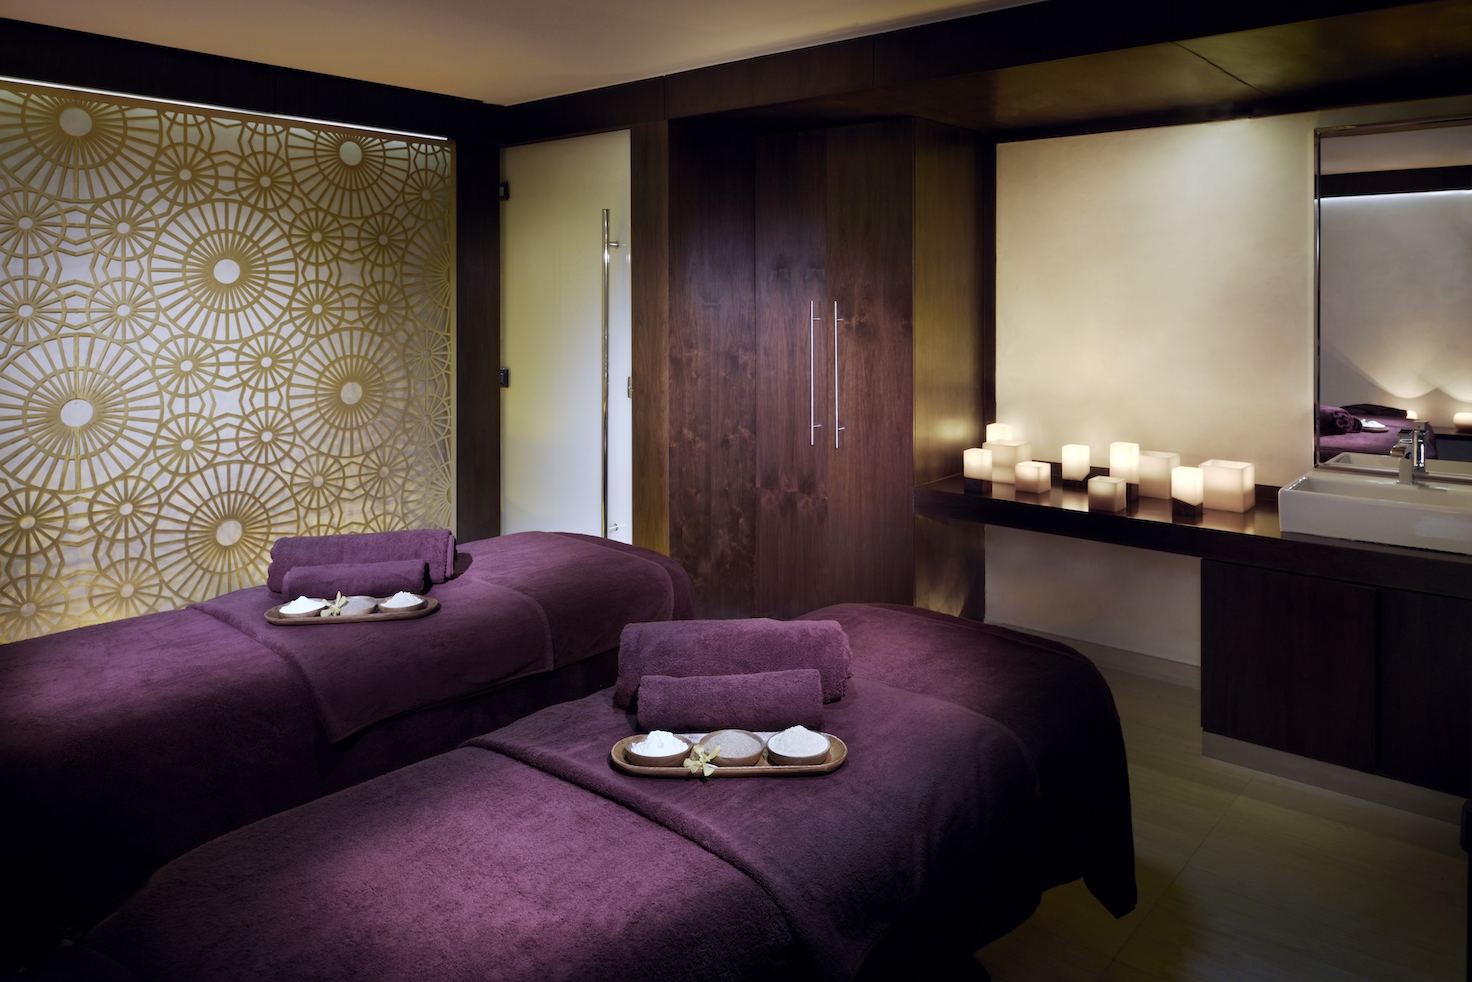 Massages rooms in Riyadh